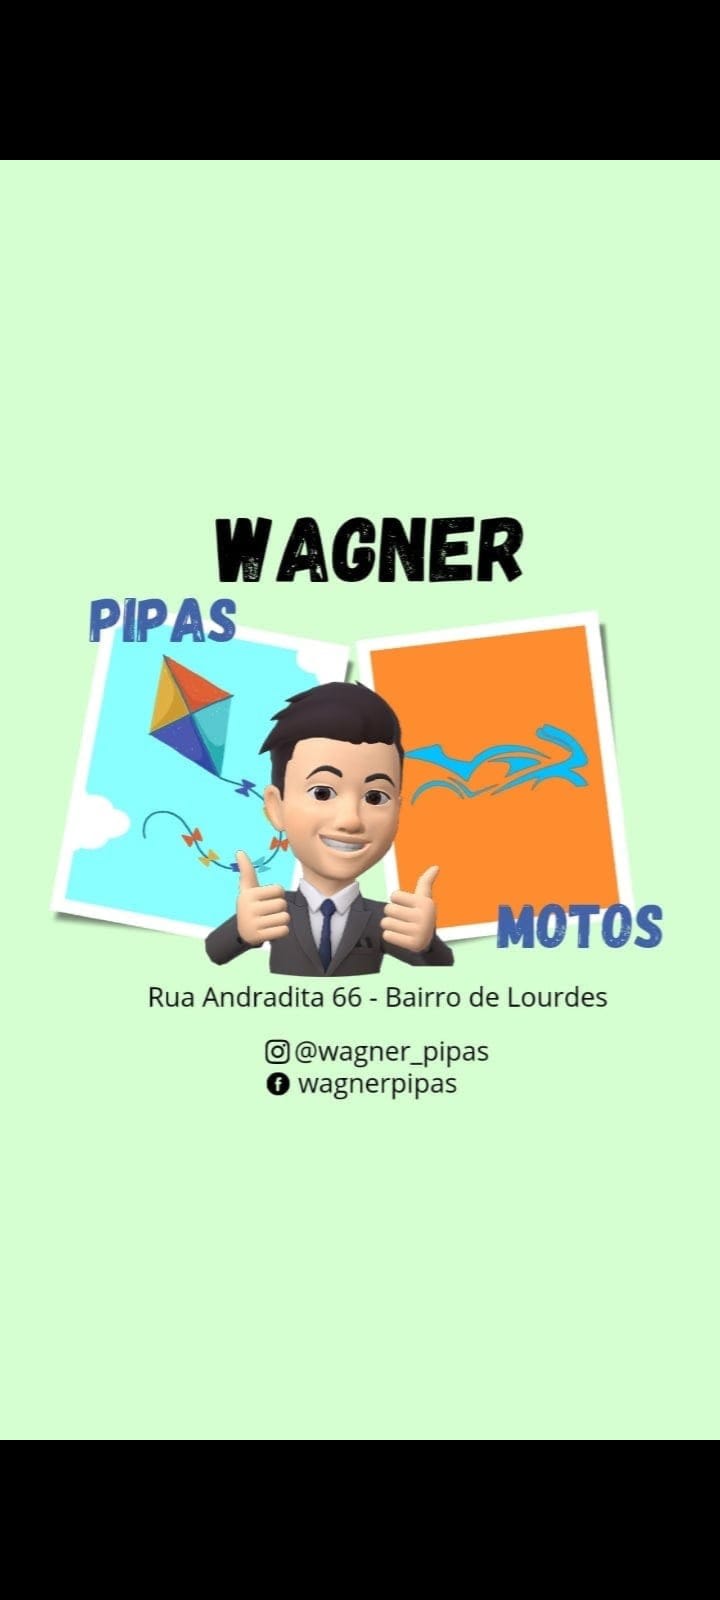 Wagner Pipas & motos